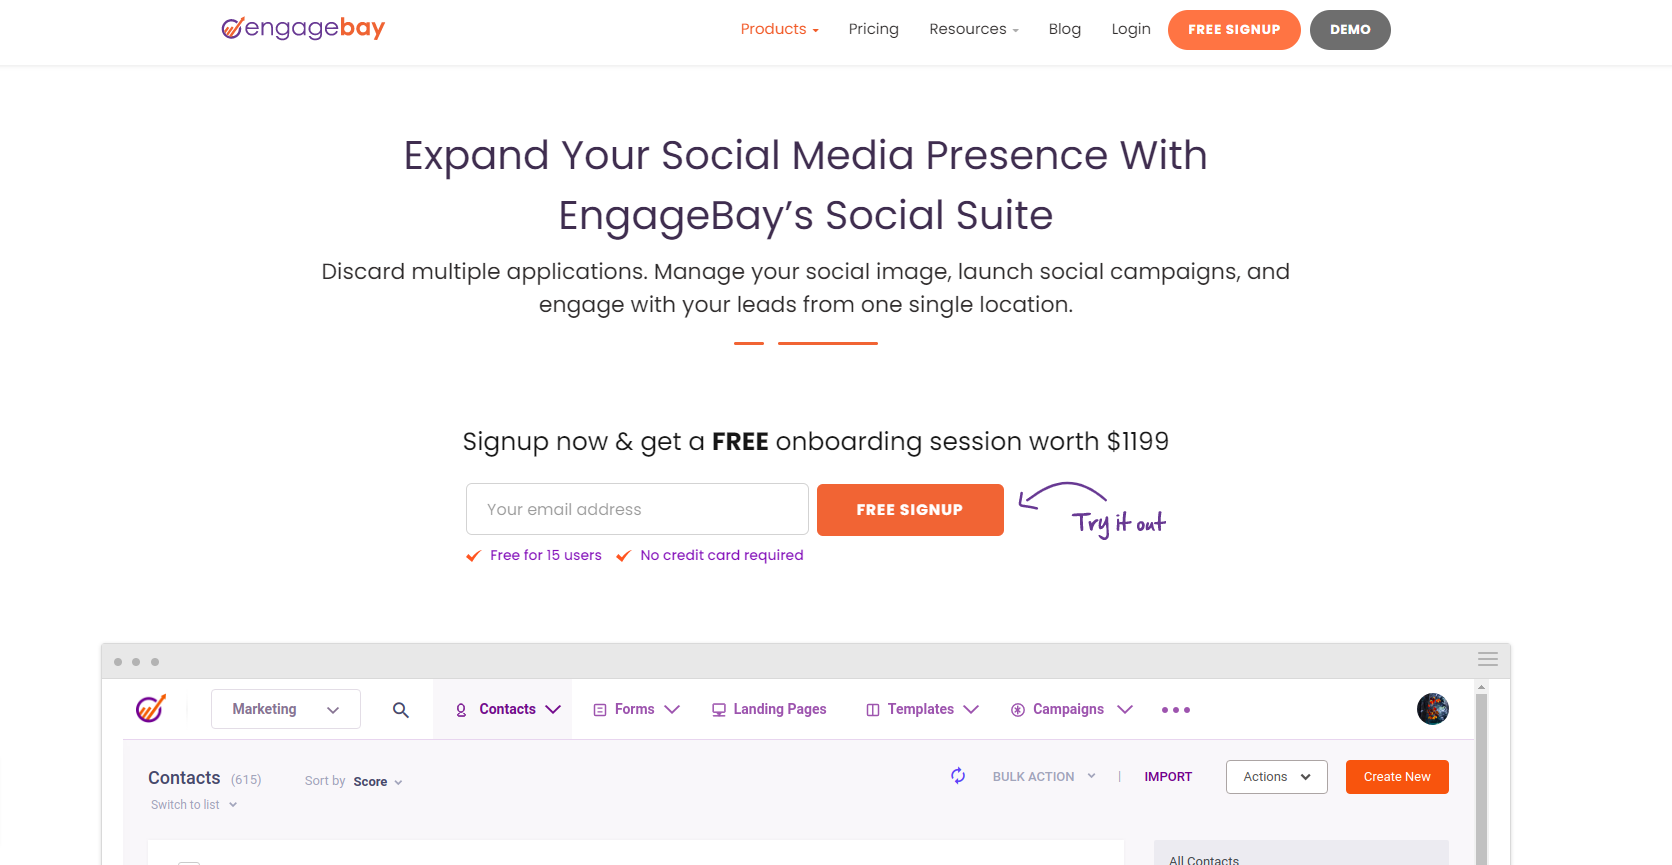 engagebay social media management tool